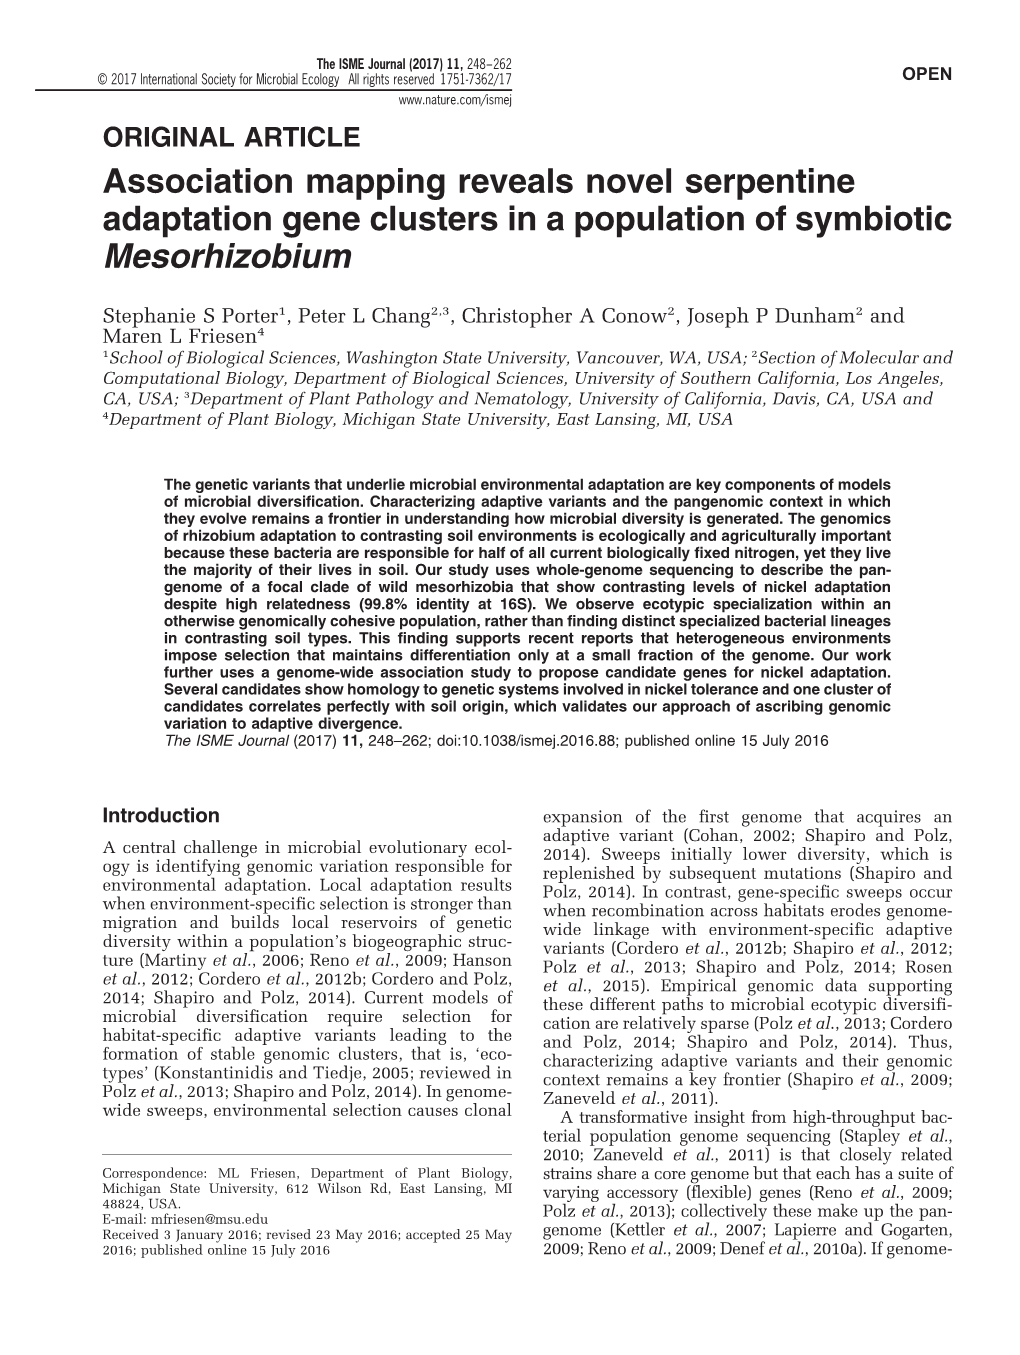 Association Mapping Reveals Novel Serpentine Adaptation Gene Clusters in a Population of Symbiotic Mesorhizobium